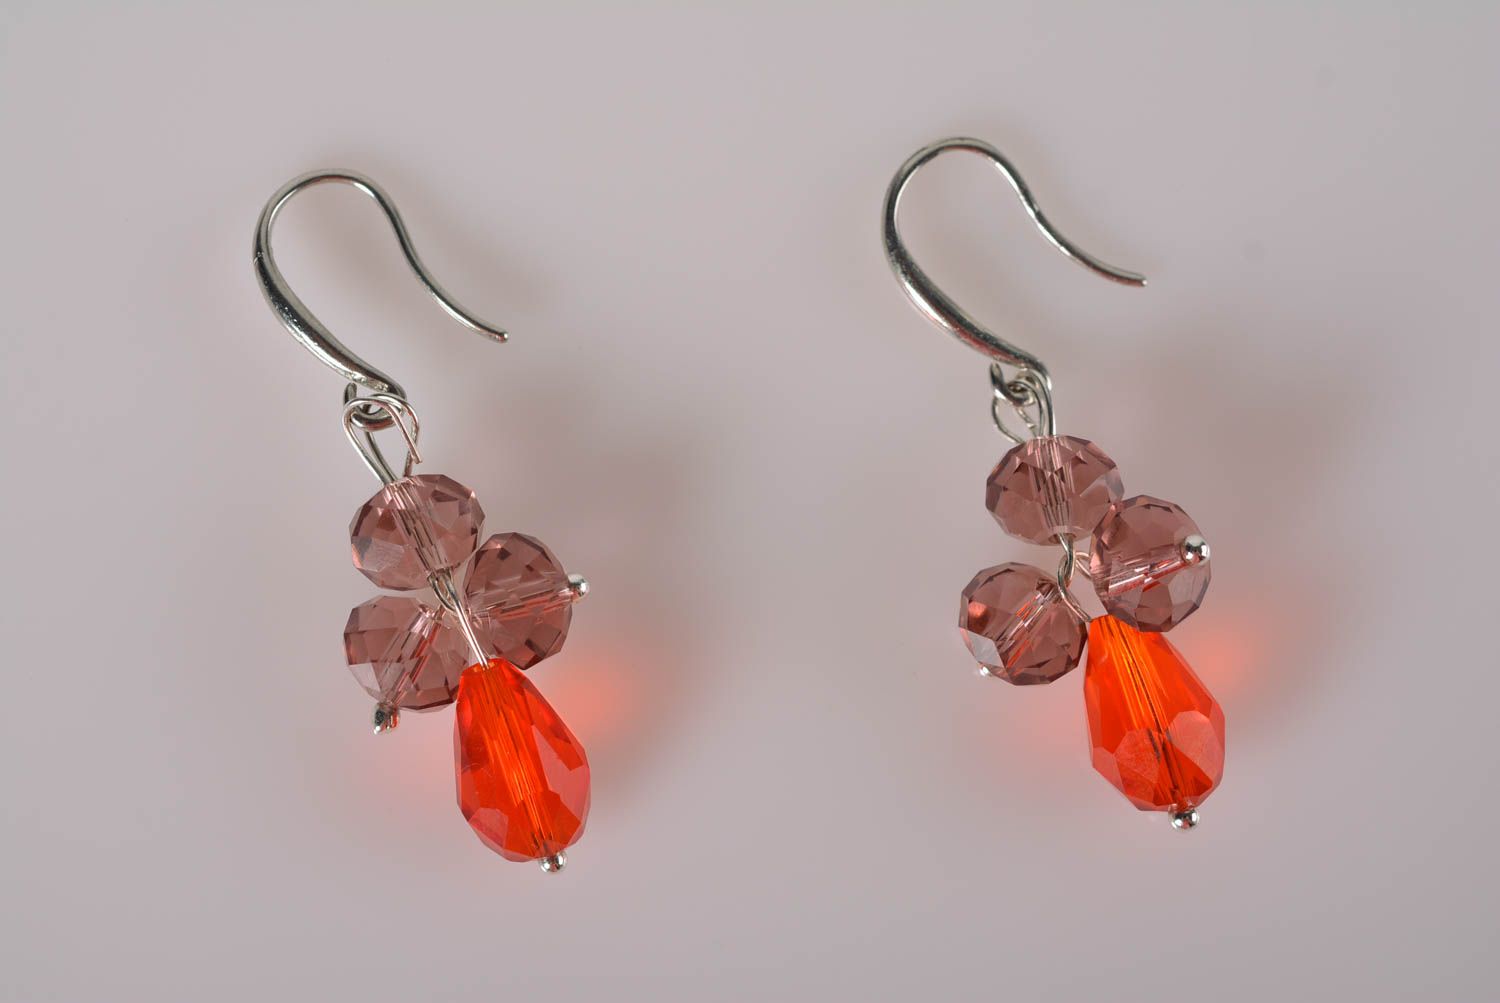 Handmade earrings glass jewelry dangling earrings fashion accessories gift ideas photo 1